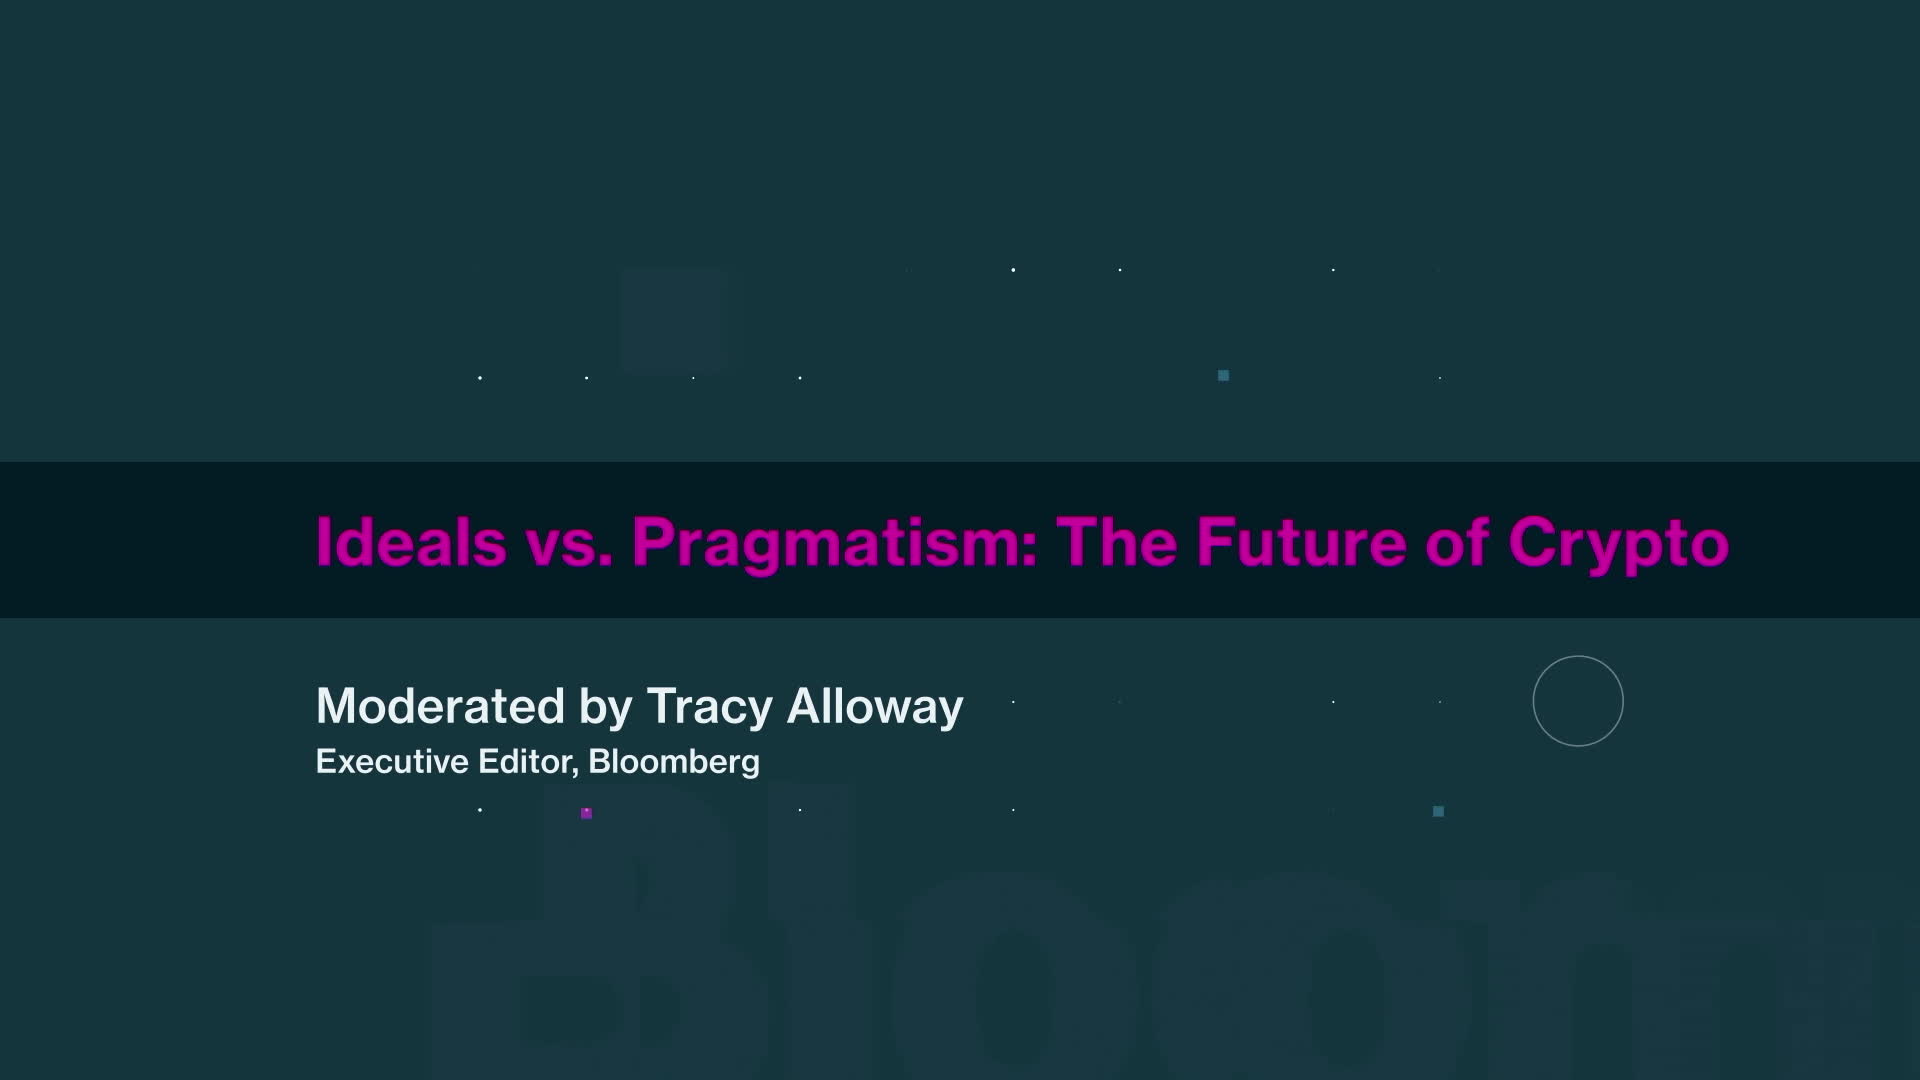 Ideals vs. Pragmatism: The Future of Crypto